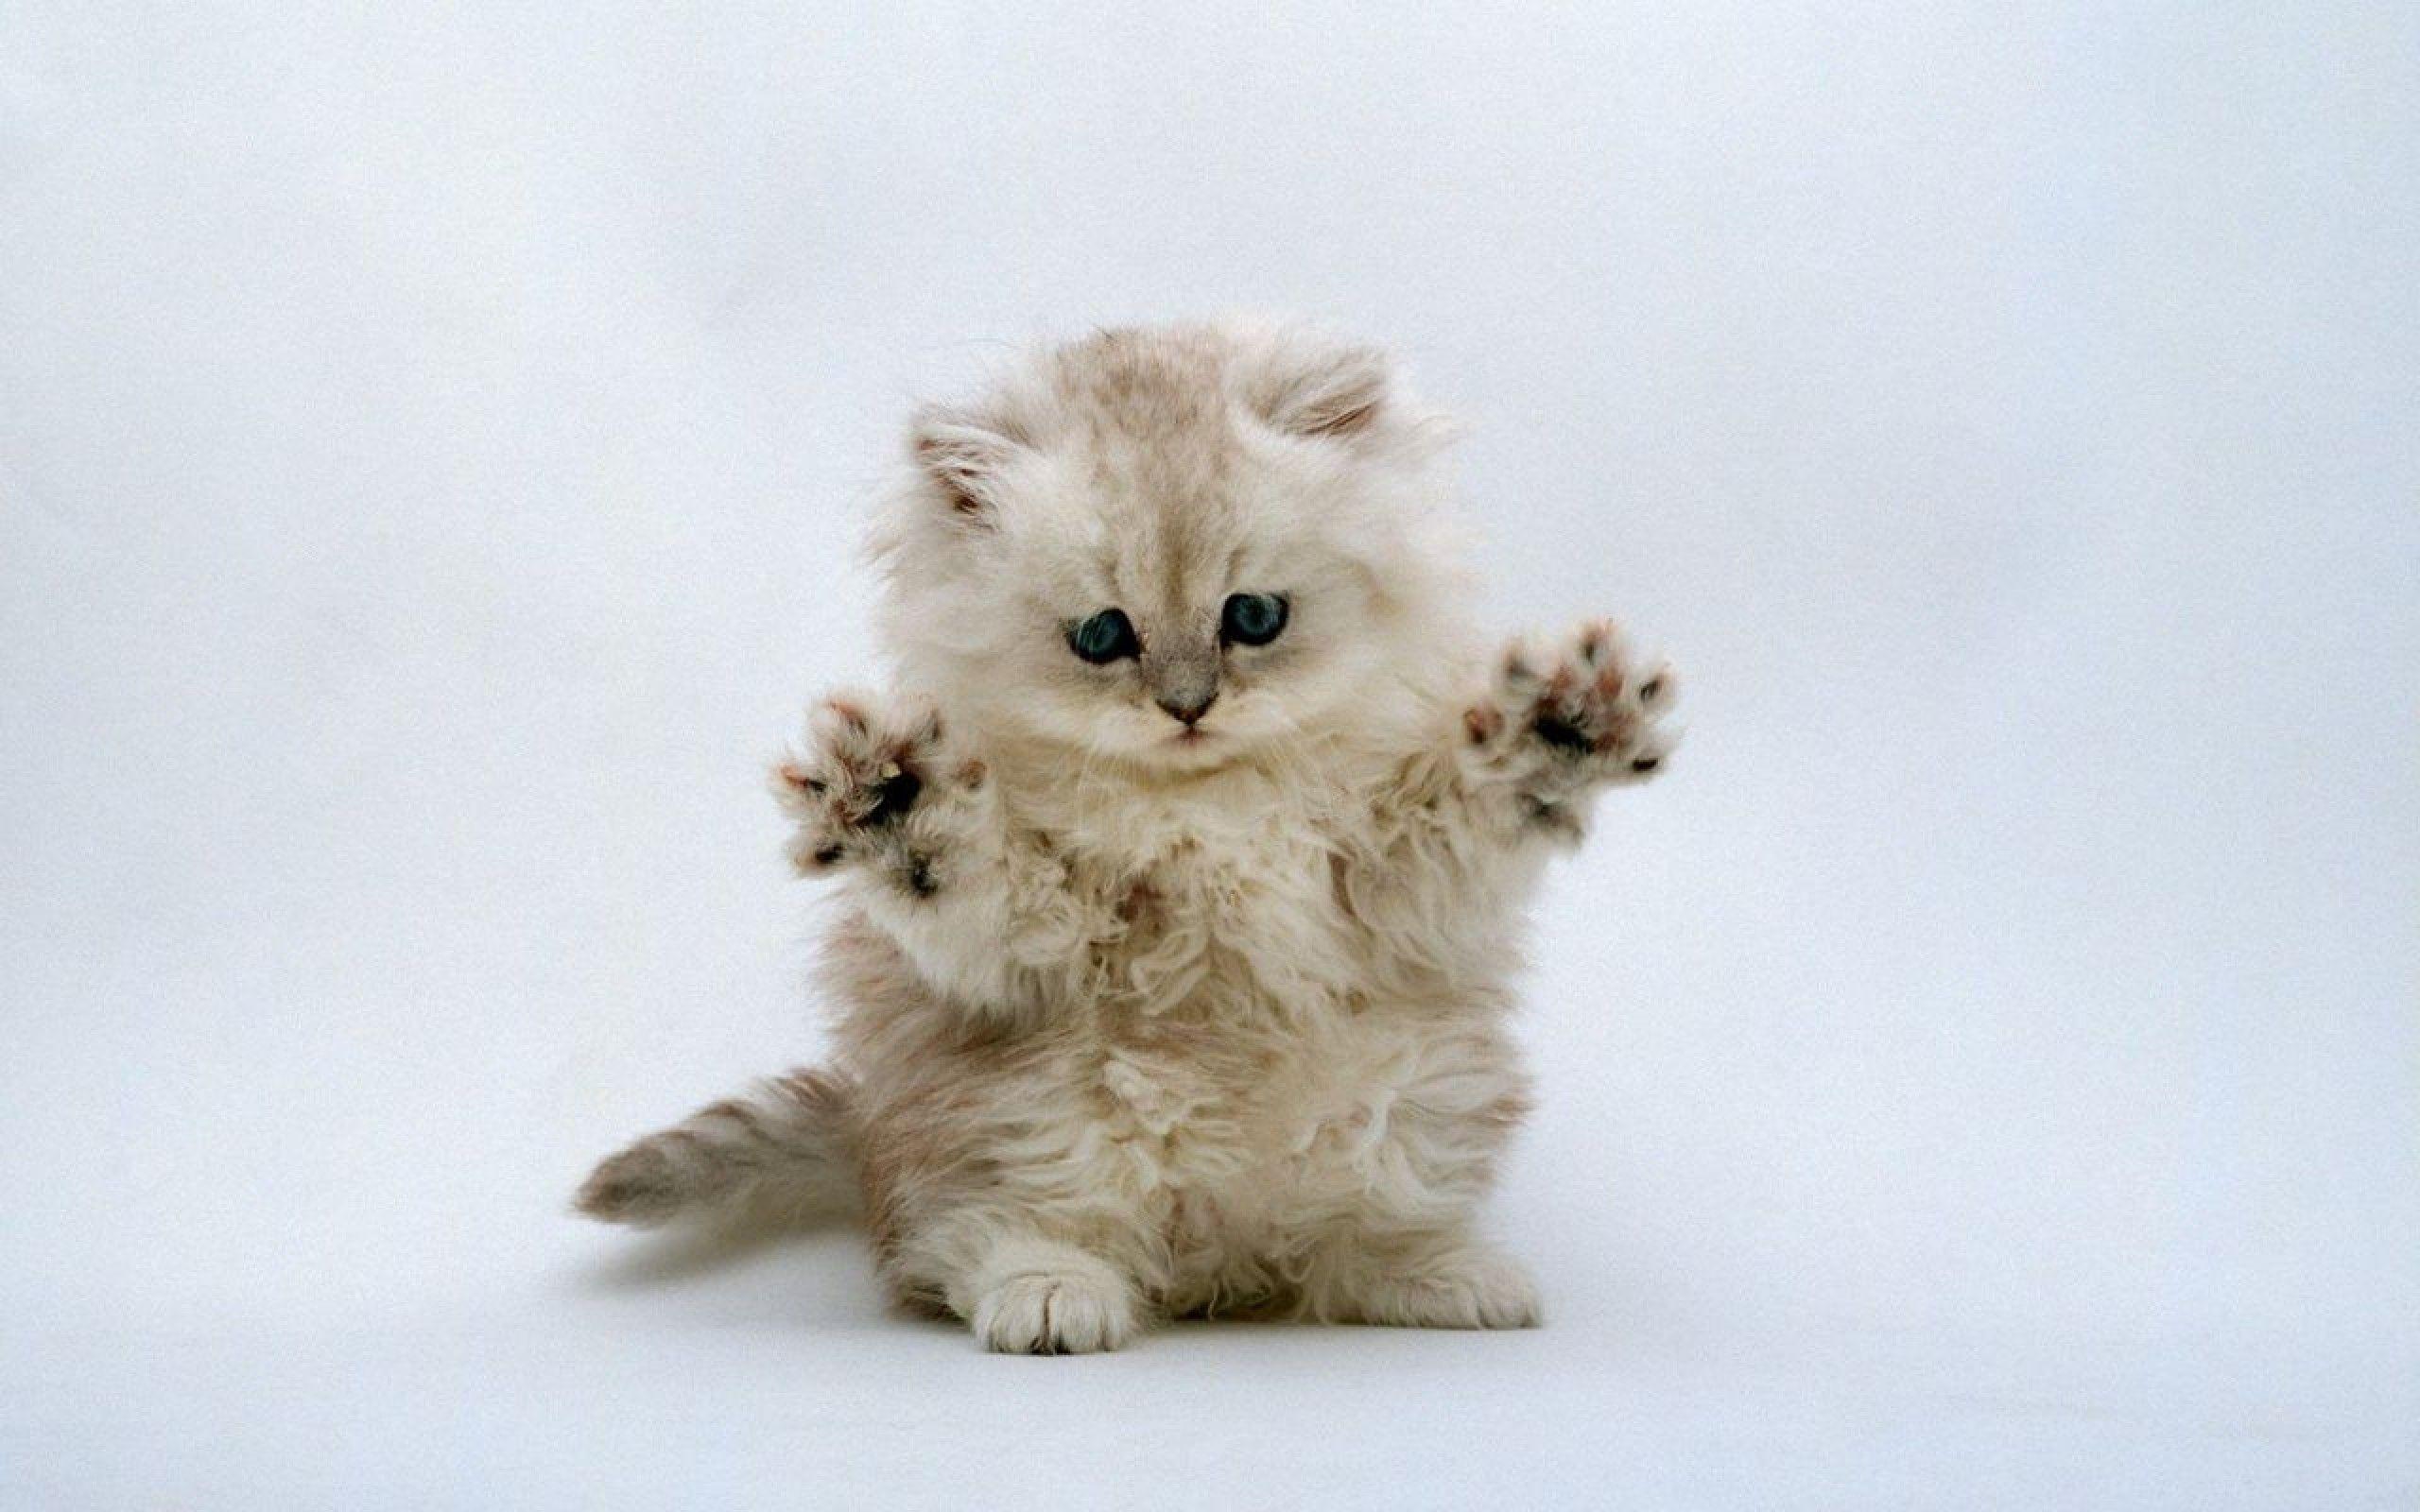 Cute Kittens Wallpaper Free Download 9677 Full HD Wallpaper